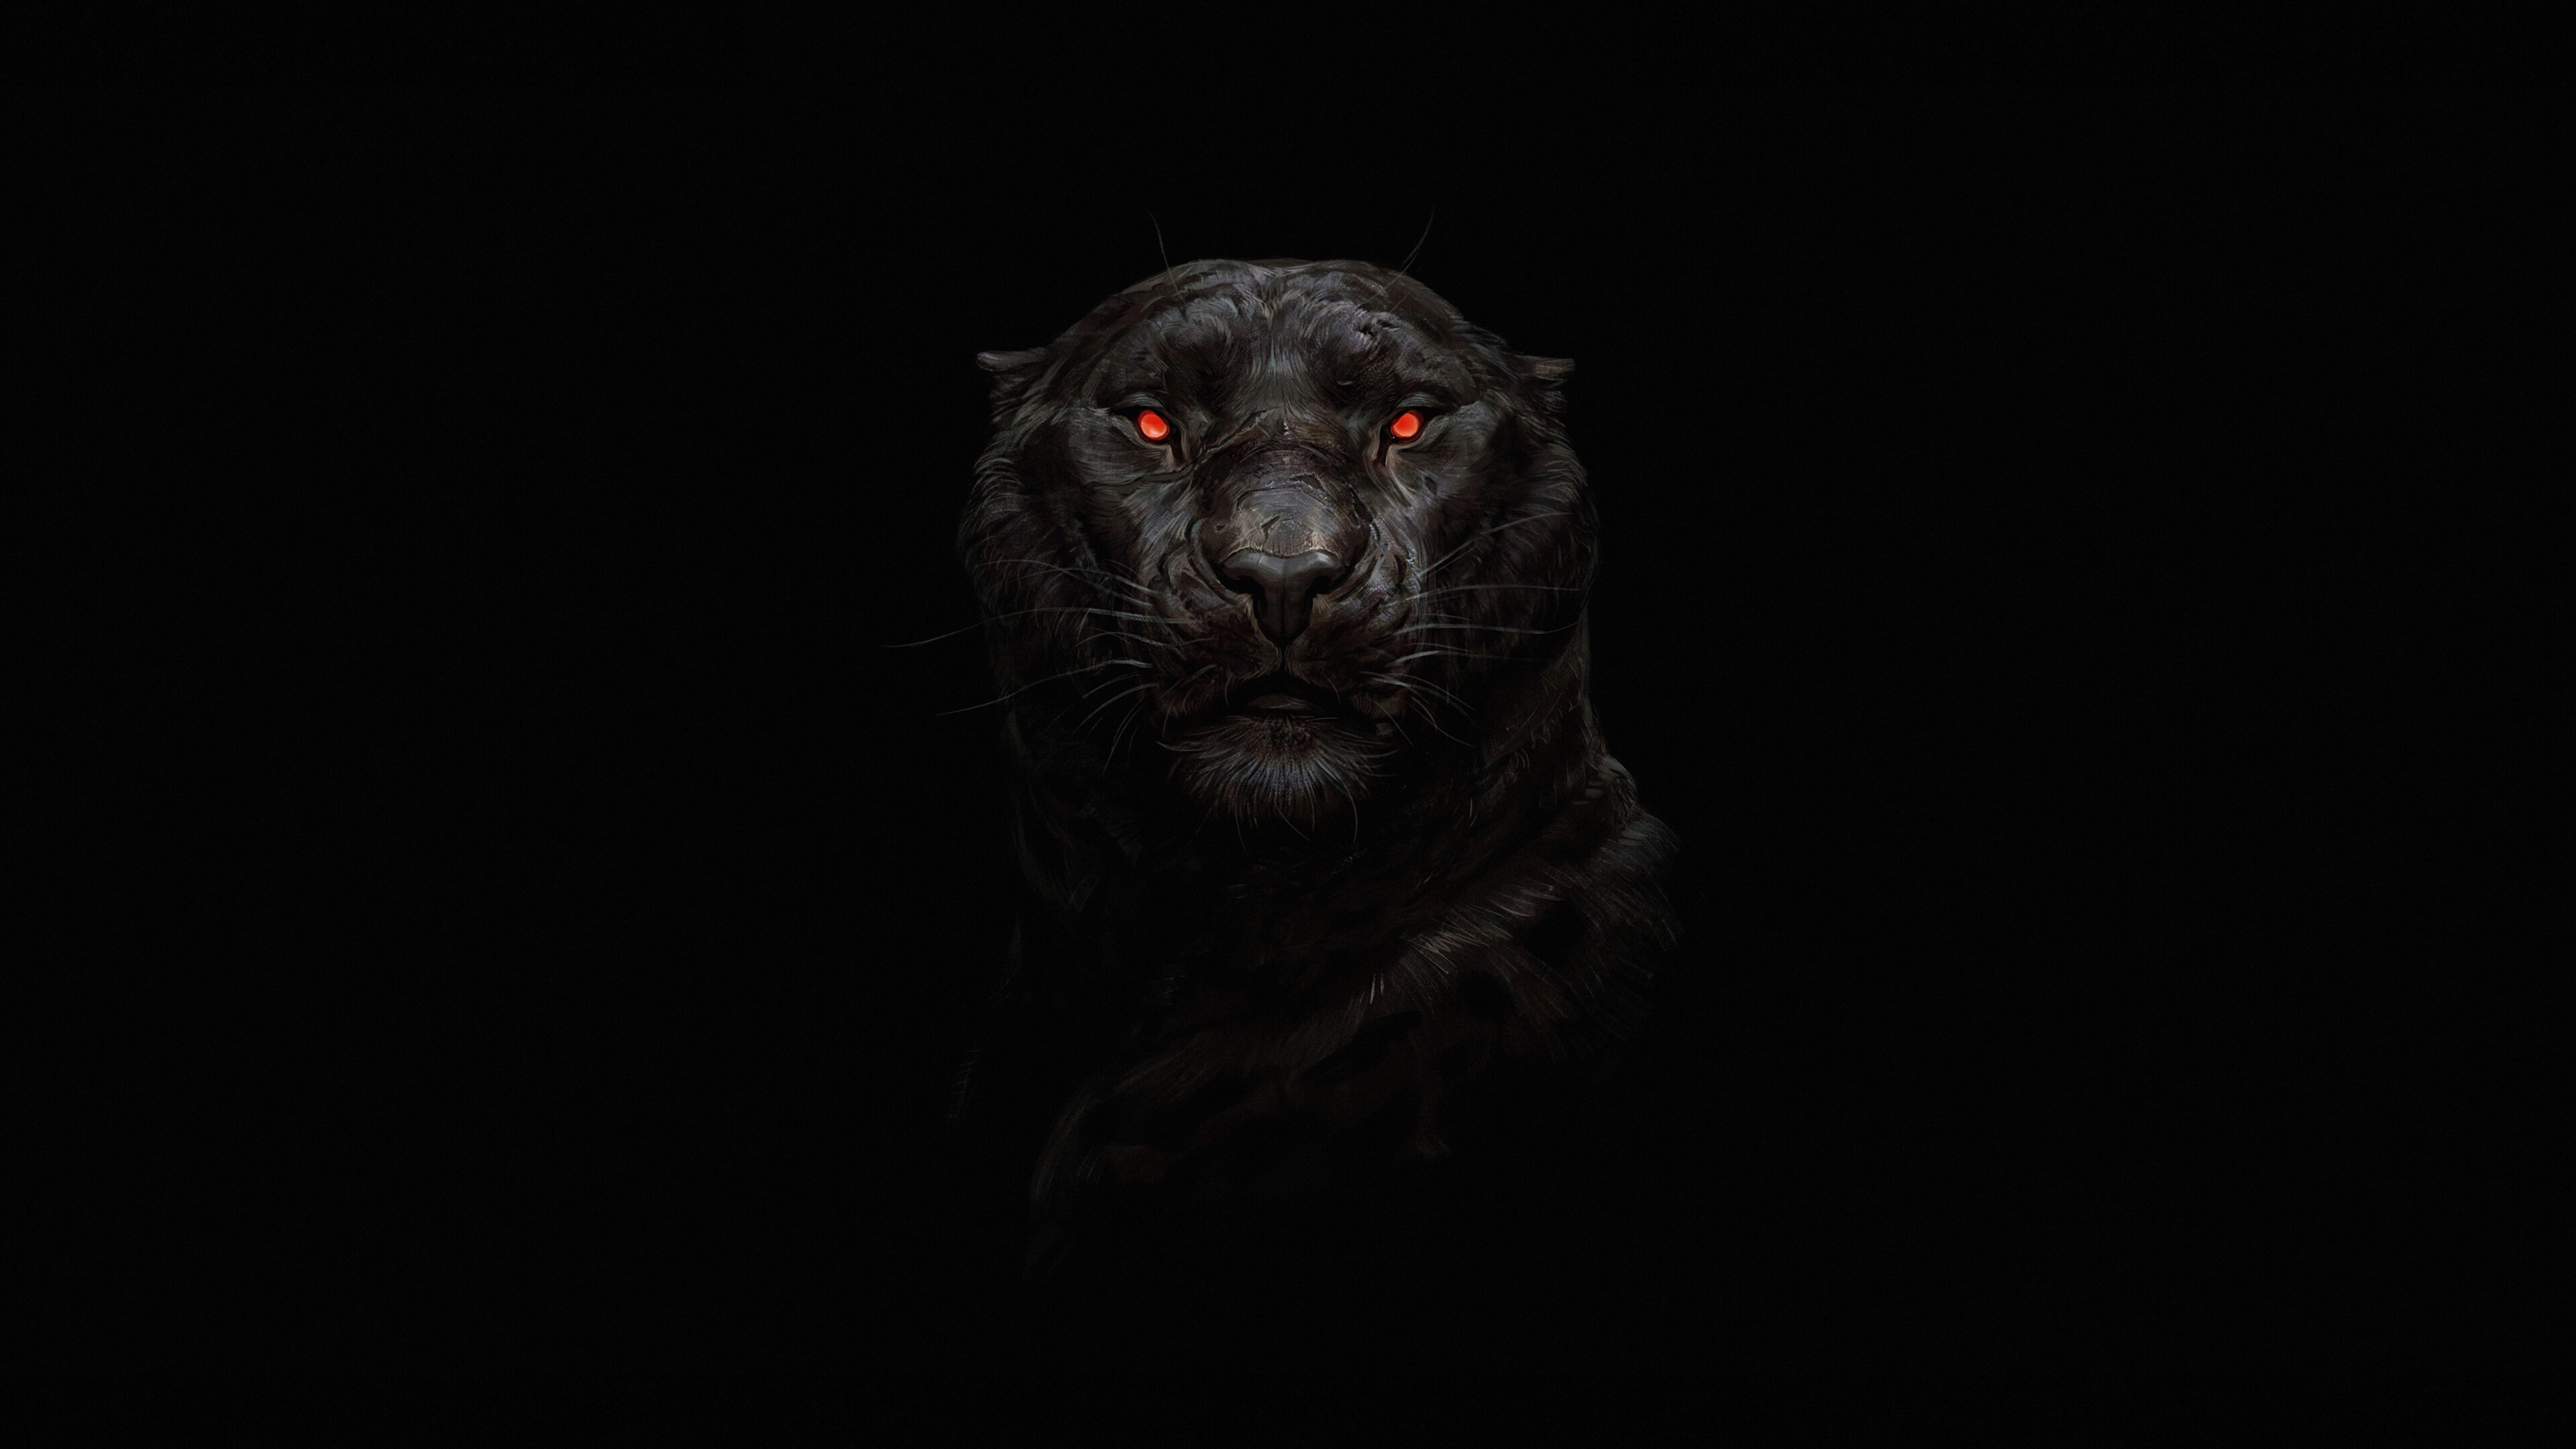 Glow in the Dark: Flashing eyes, Wild cat, Neon effect, Minimalistic, Panther. 3840x2160 4K Wallpaper.